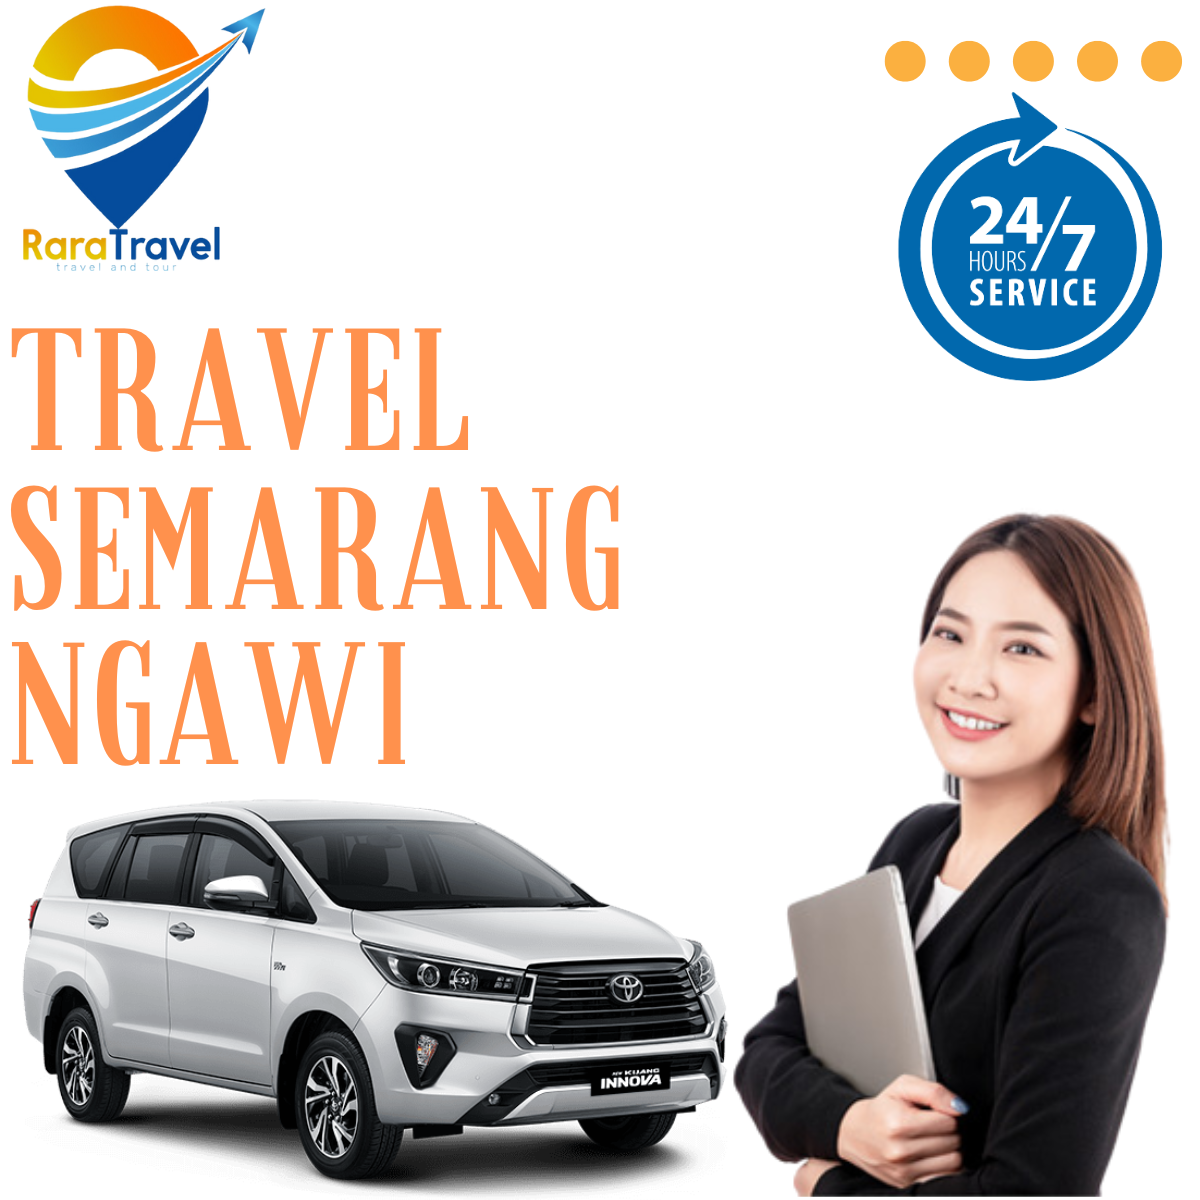 Travel Semarang Ngawi PP Hiace Harga Murah - RARATRAVEL.ID